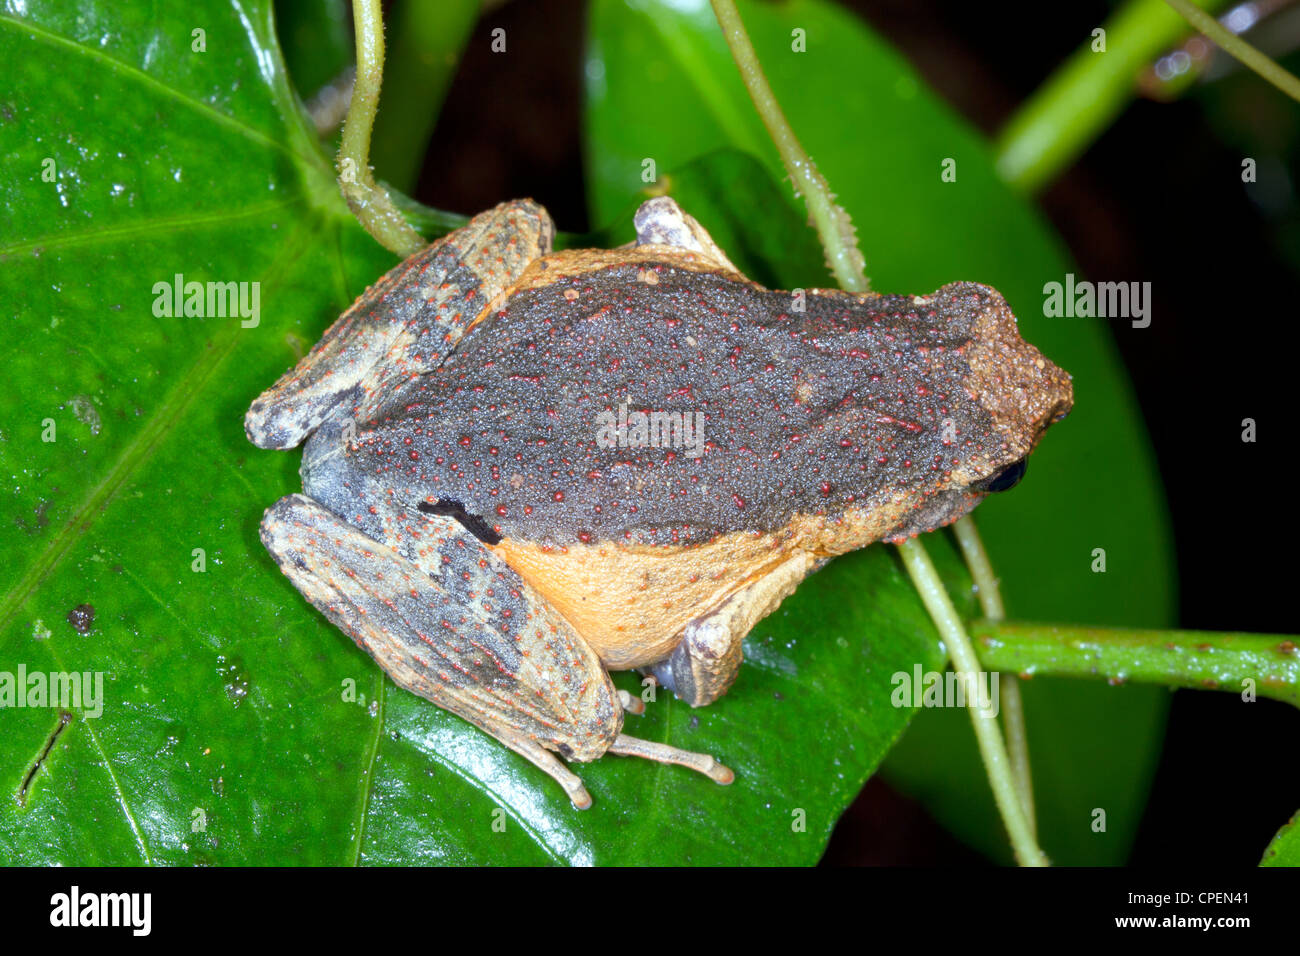 Peters' Dwarf Frog (Engystomops petersi) in rainforest, Ecuador Stock Photo